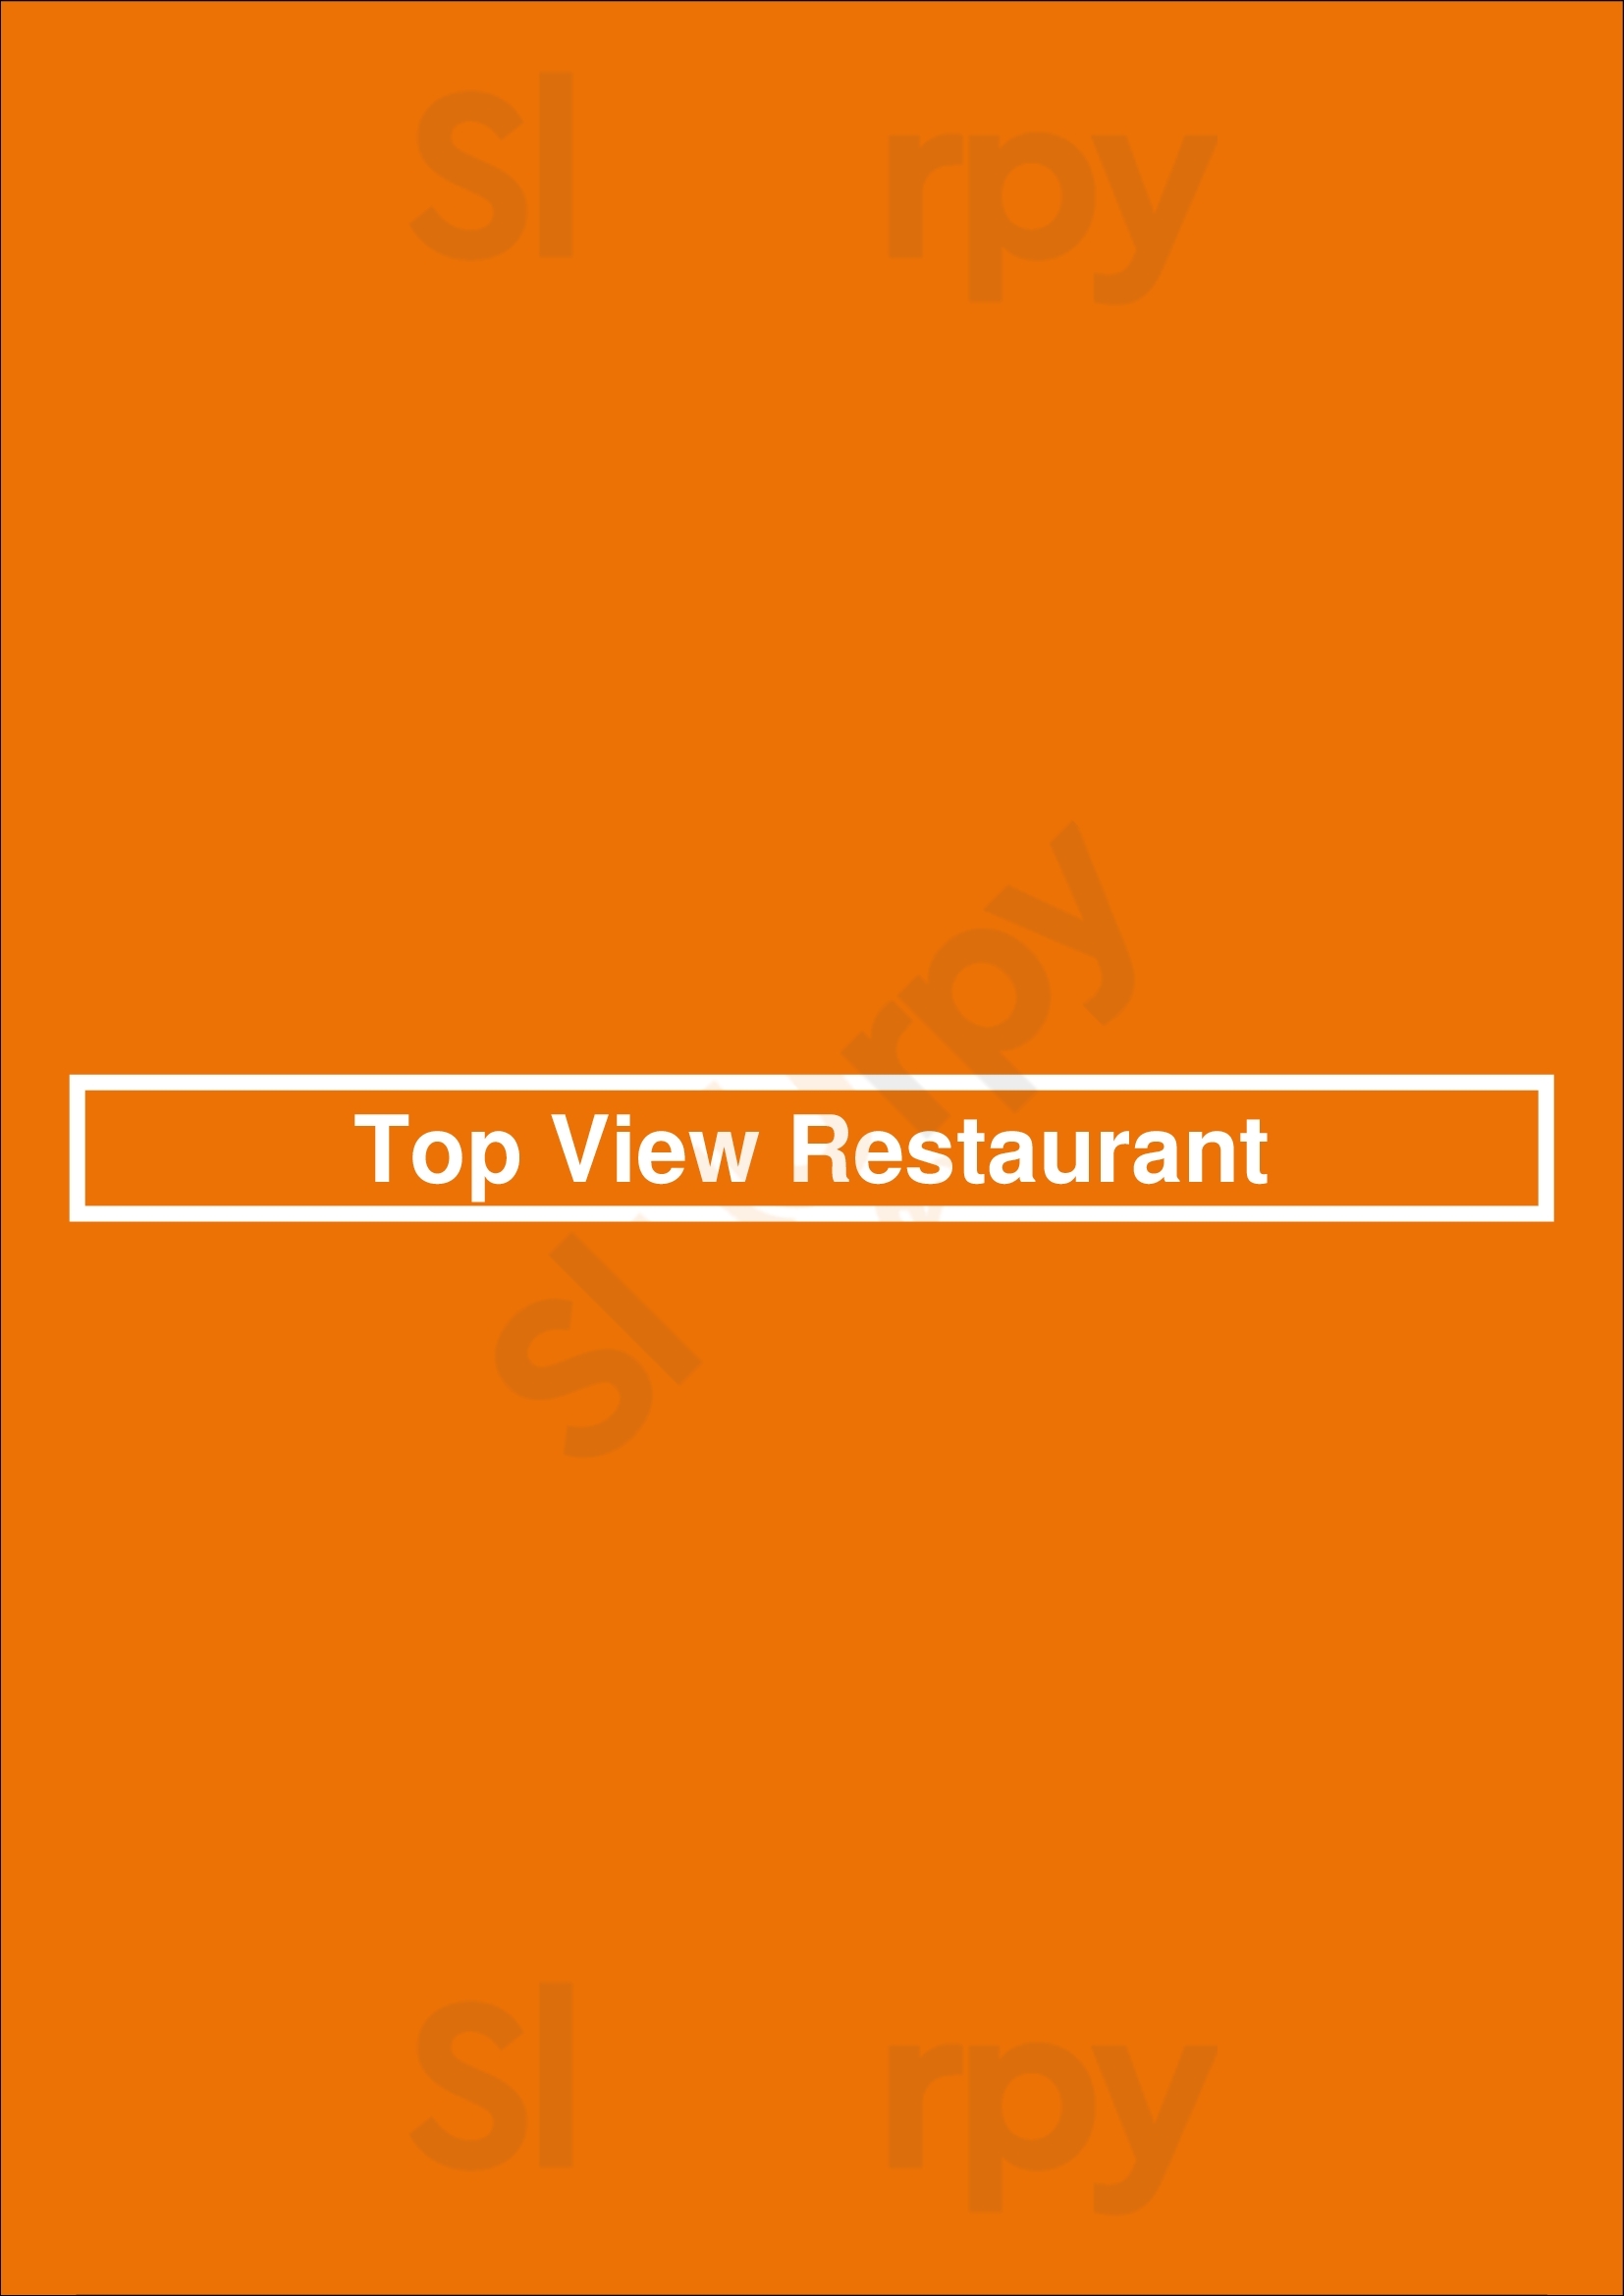 Top View Restaurant Chicago Menu - 1